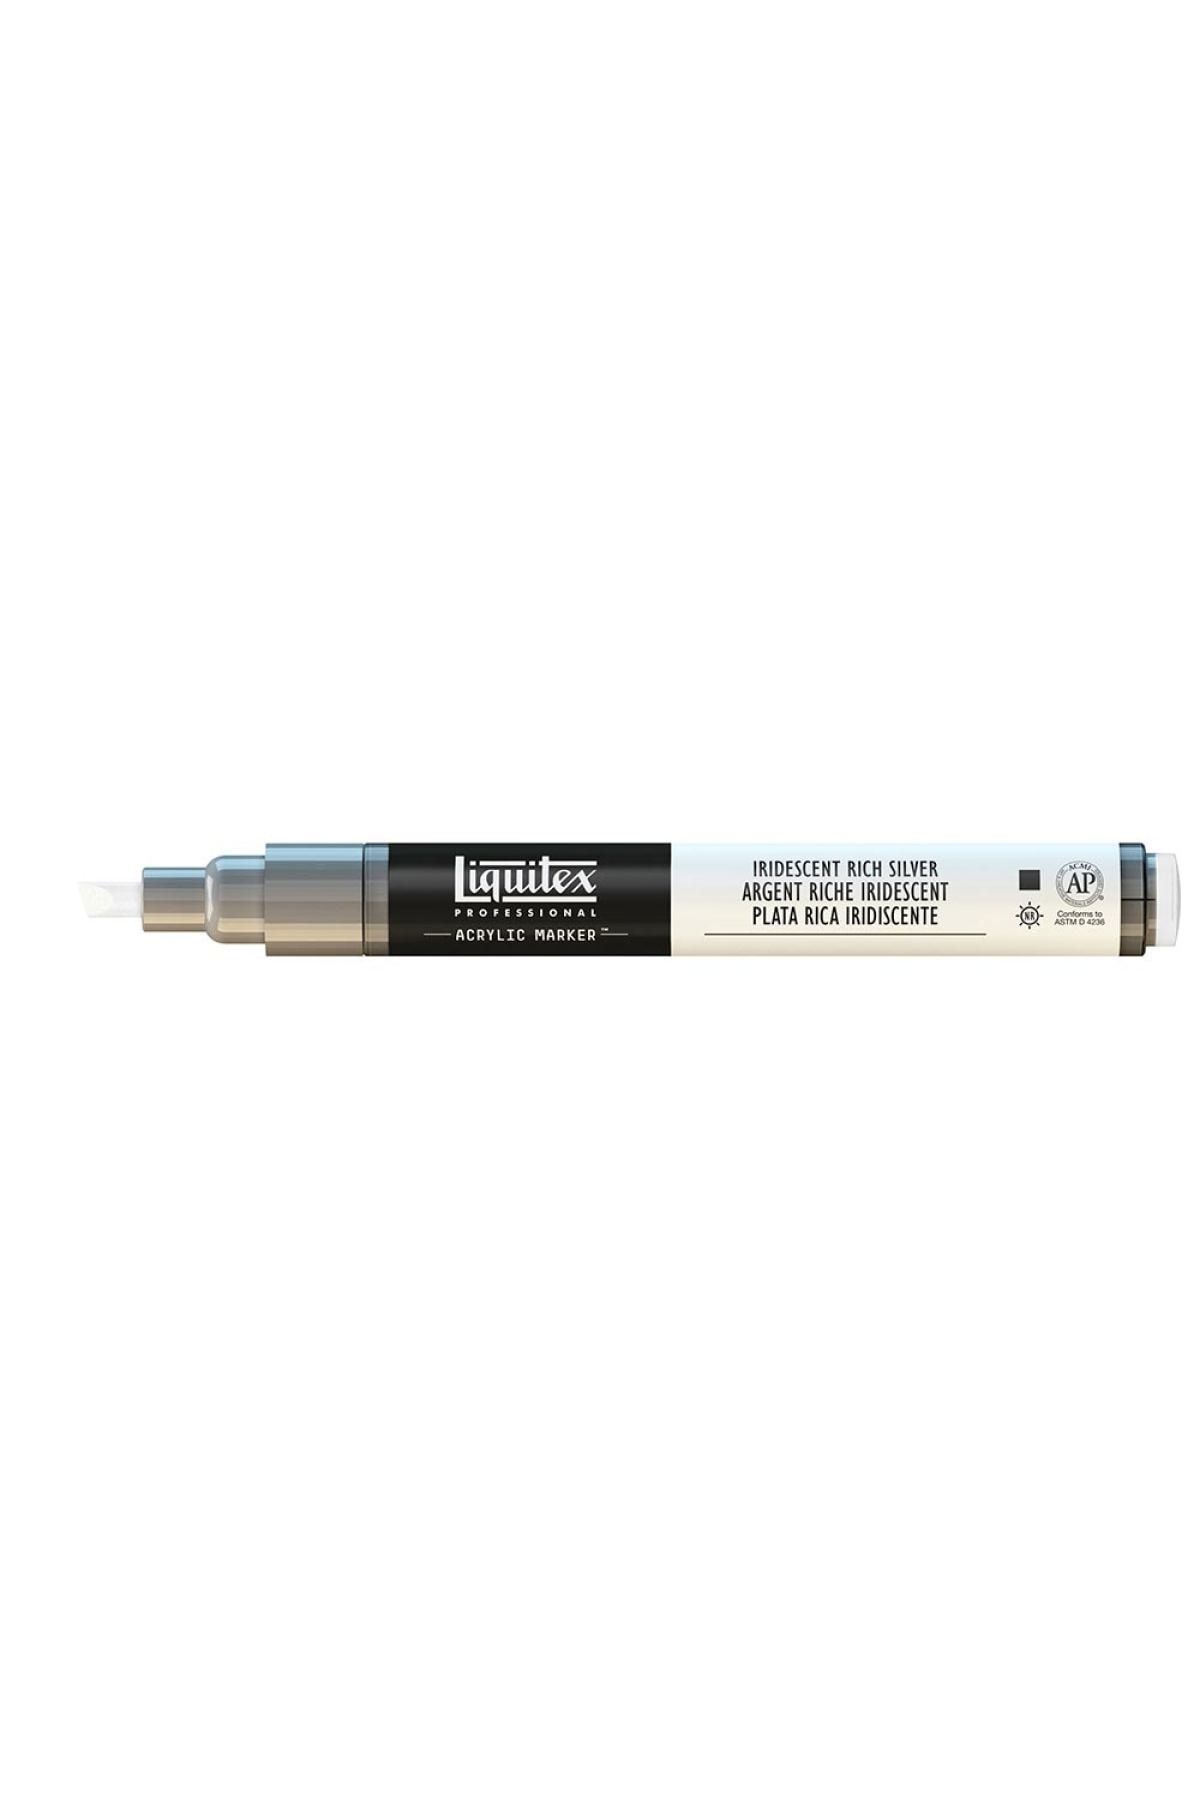 Liquitex Professional Akrilik Markör Ince Uç 2mm Iridescent Rich Silver 239